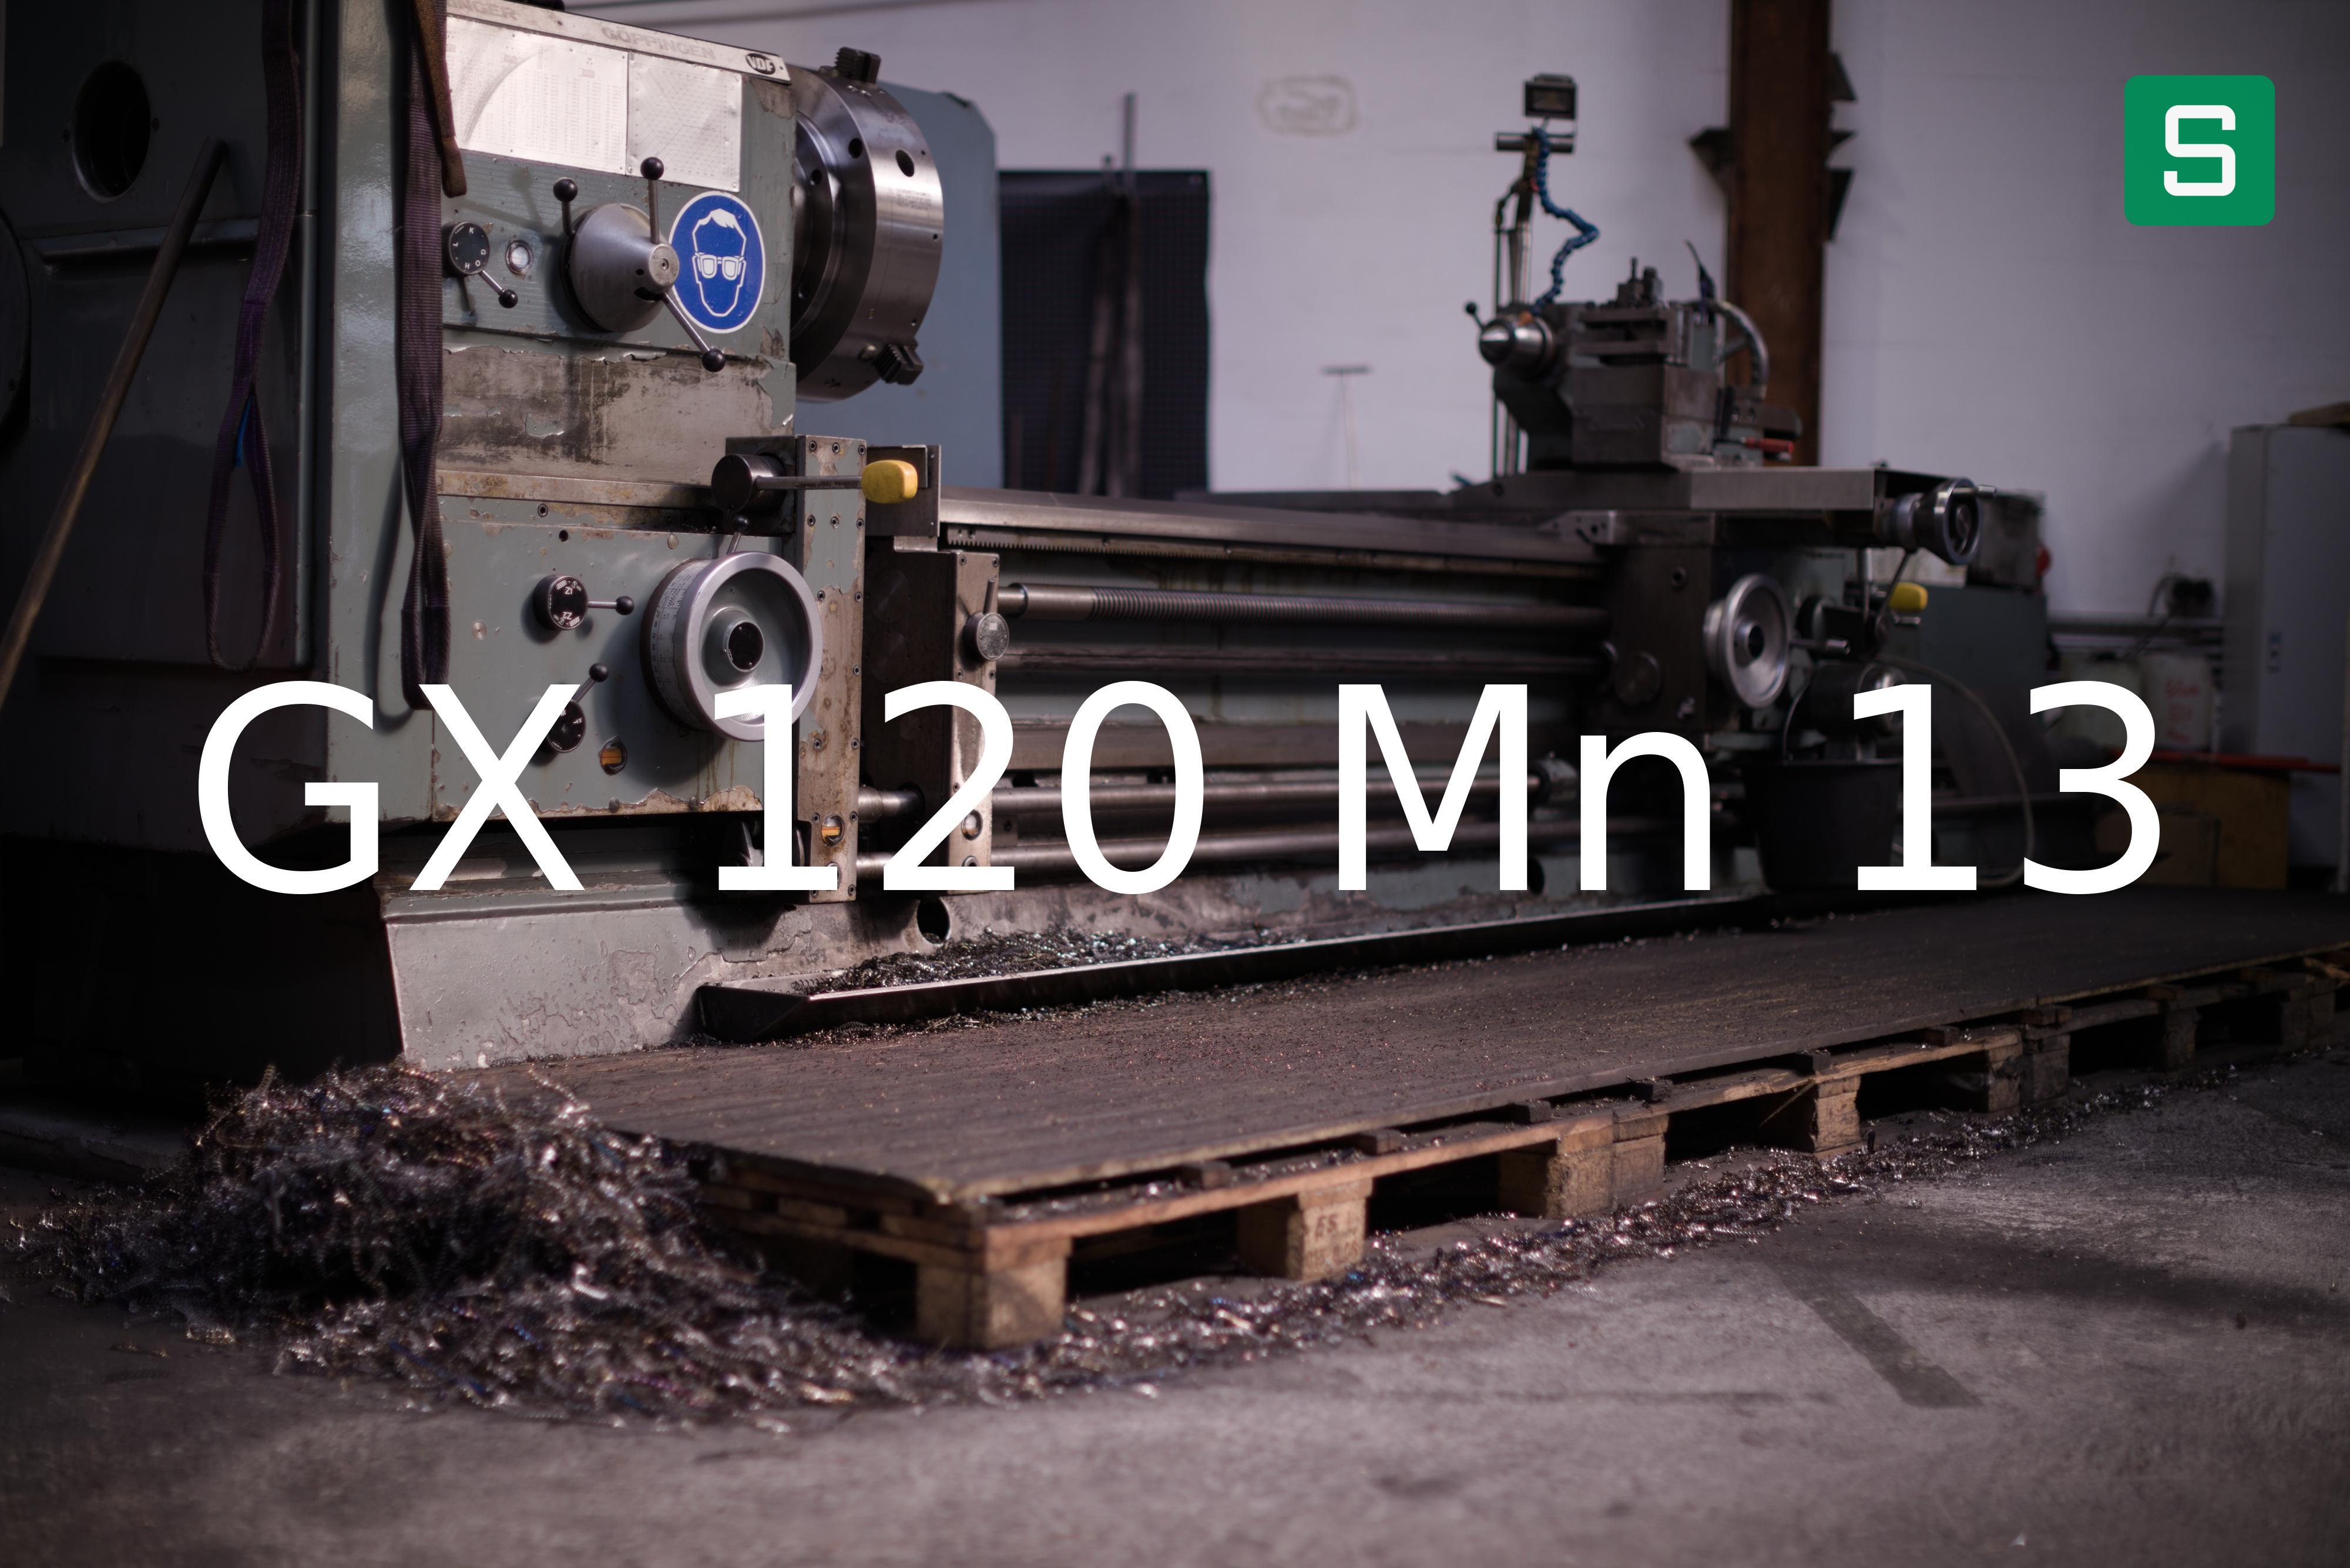 Steel Material: GX 120 Mn 13